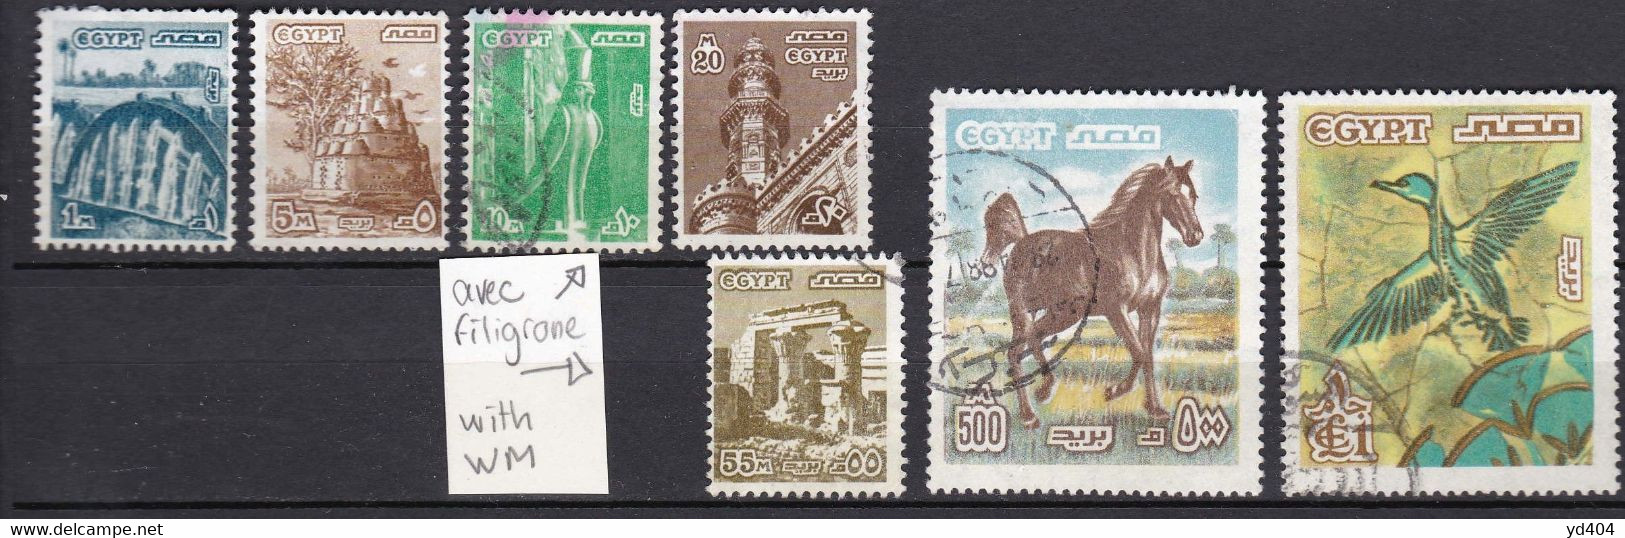 EG150 – EGYPTE – EGYPT – 1978 - USED SET - CV 15 € - Usati